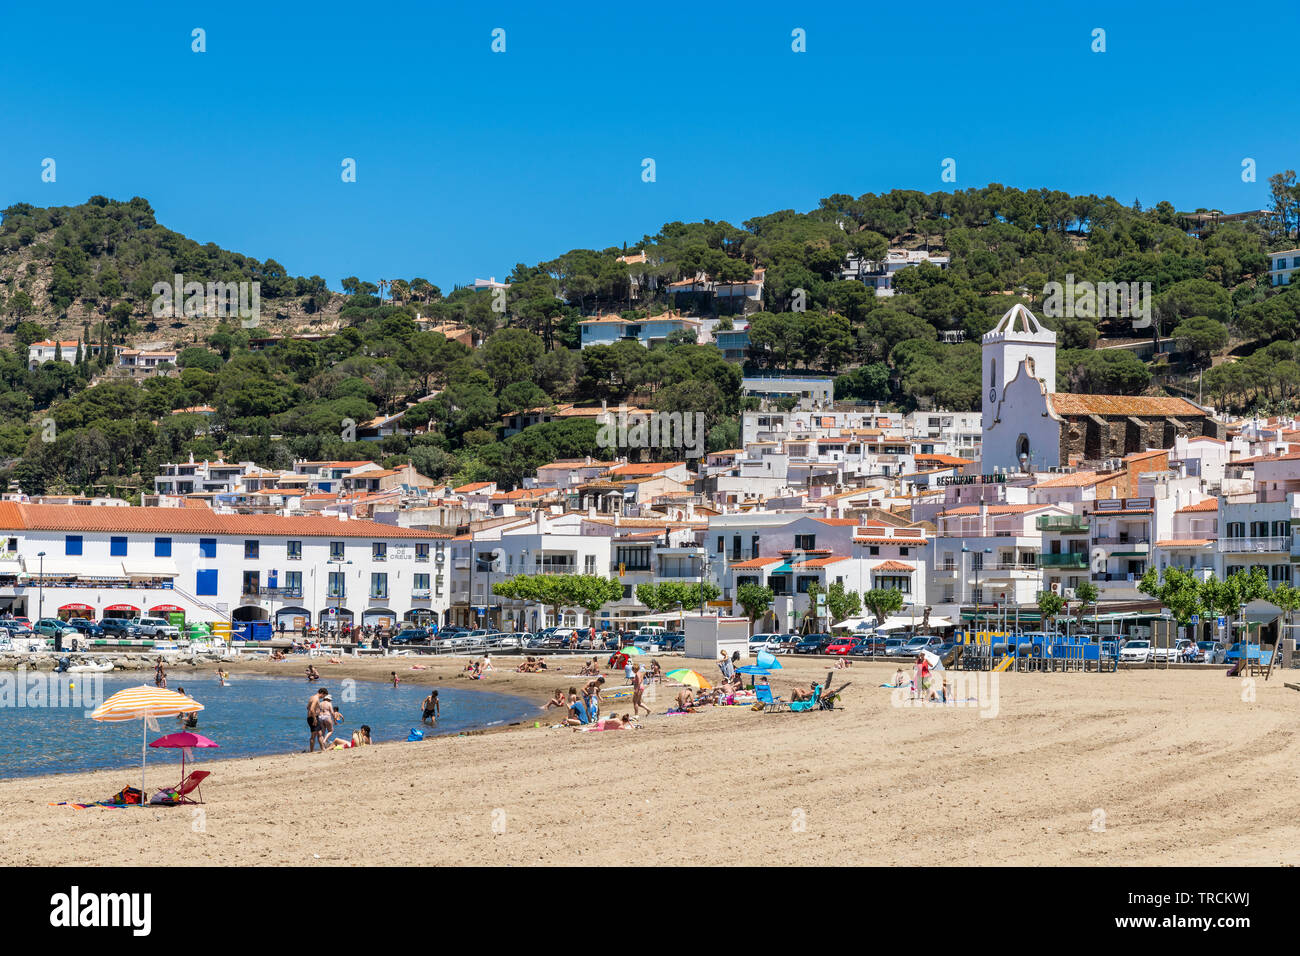 El Port de la Selva, Costa Brava, Catalonia, Spain Stock Photo - Alamy